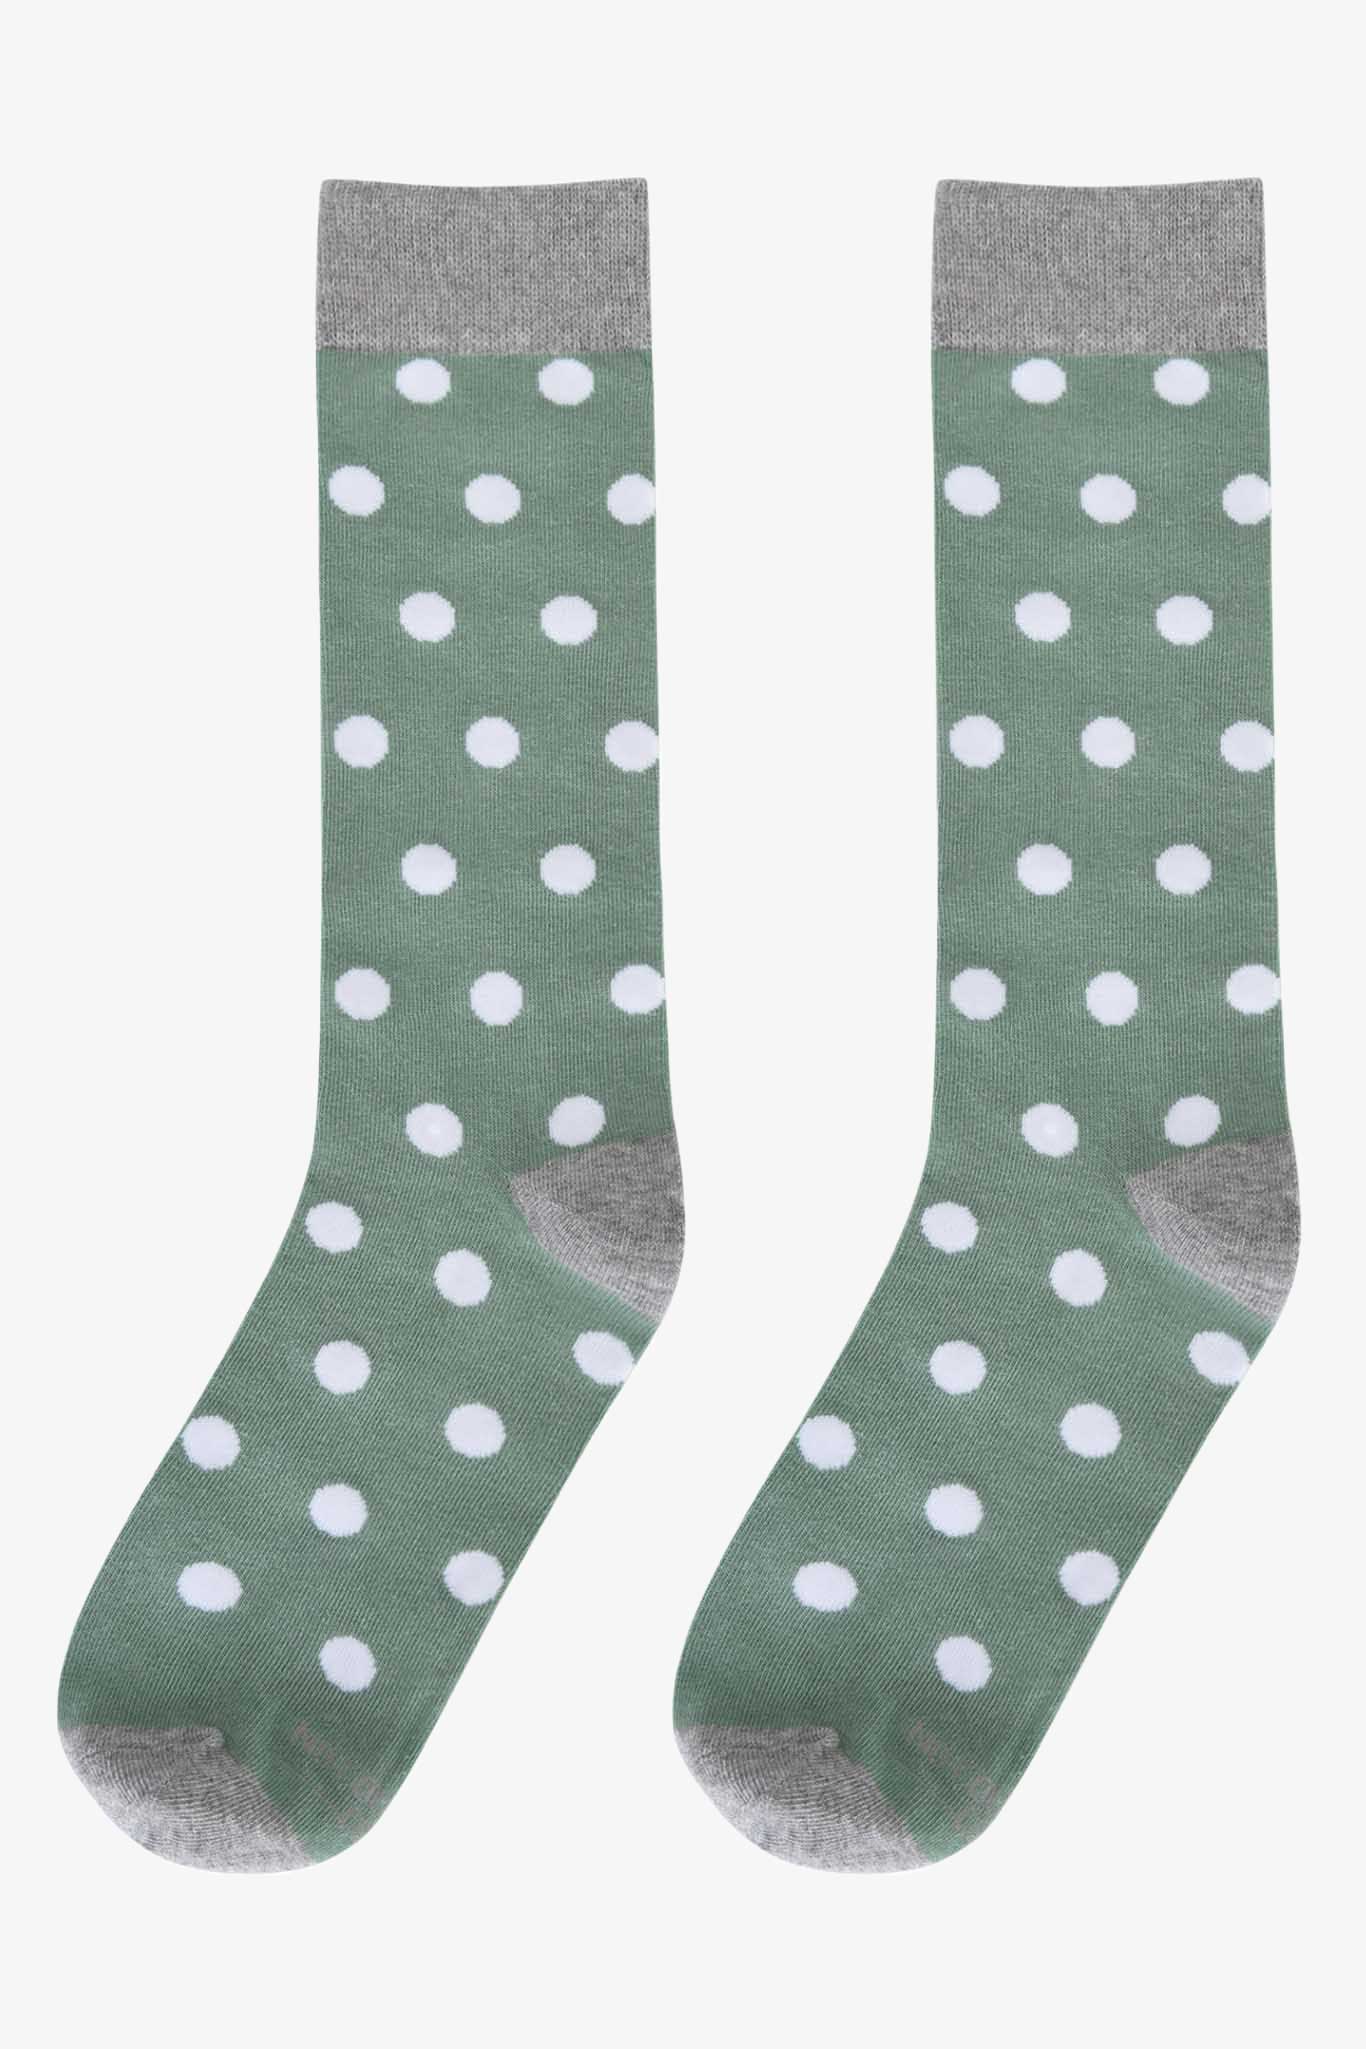 Sage Polka Dot Groomsmen Socks By No Cold Feet 